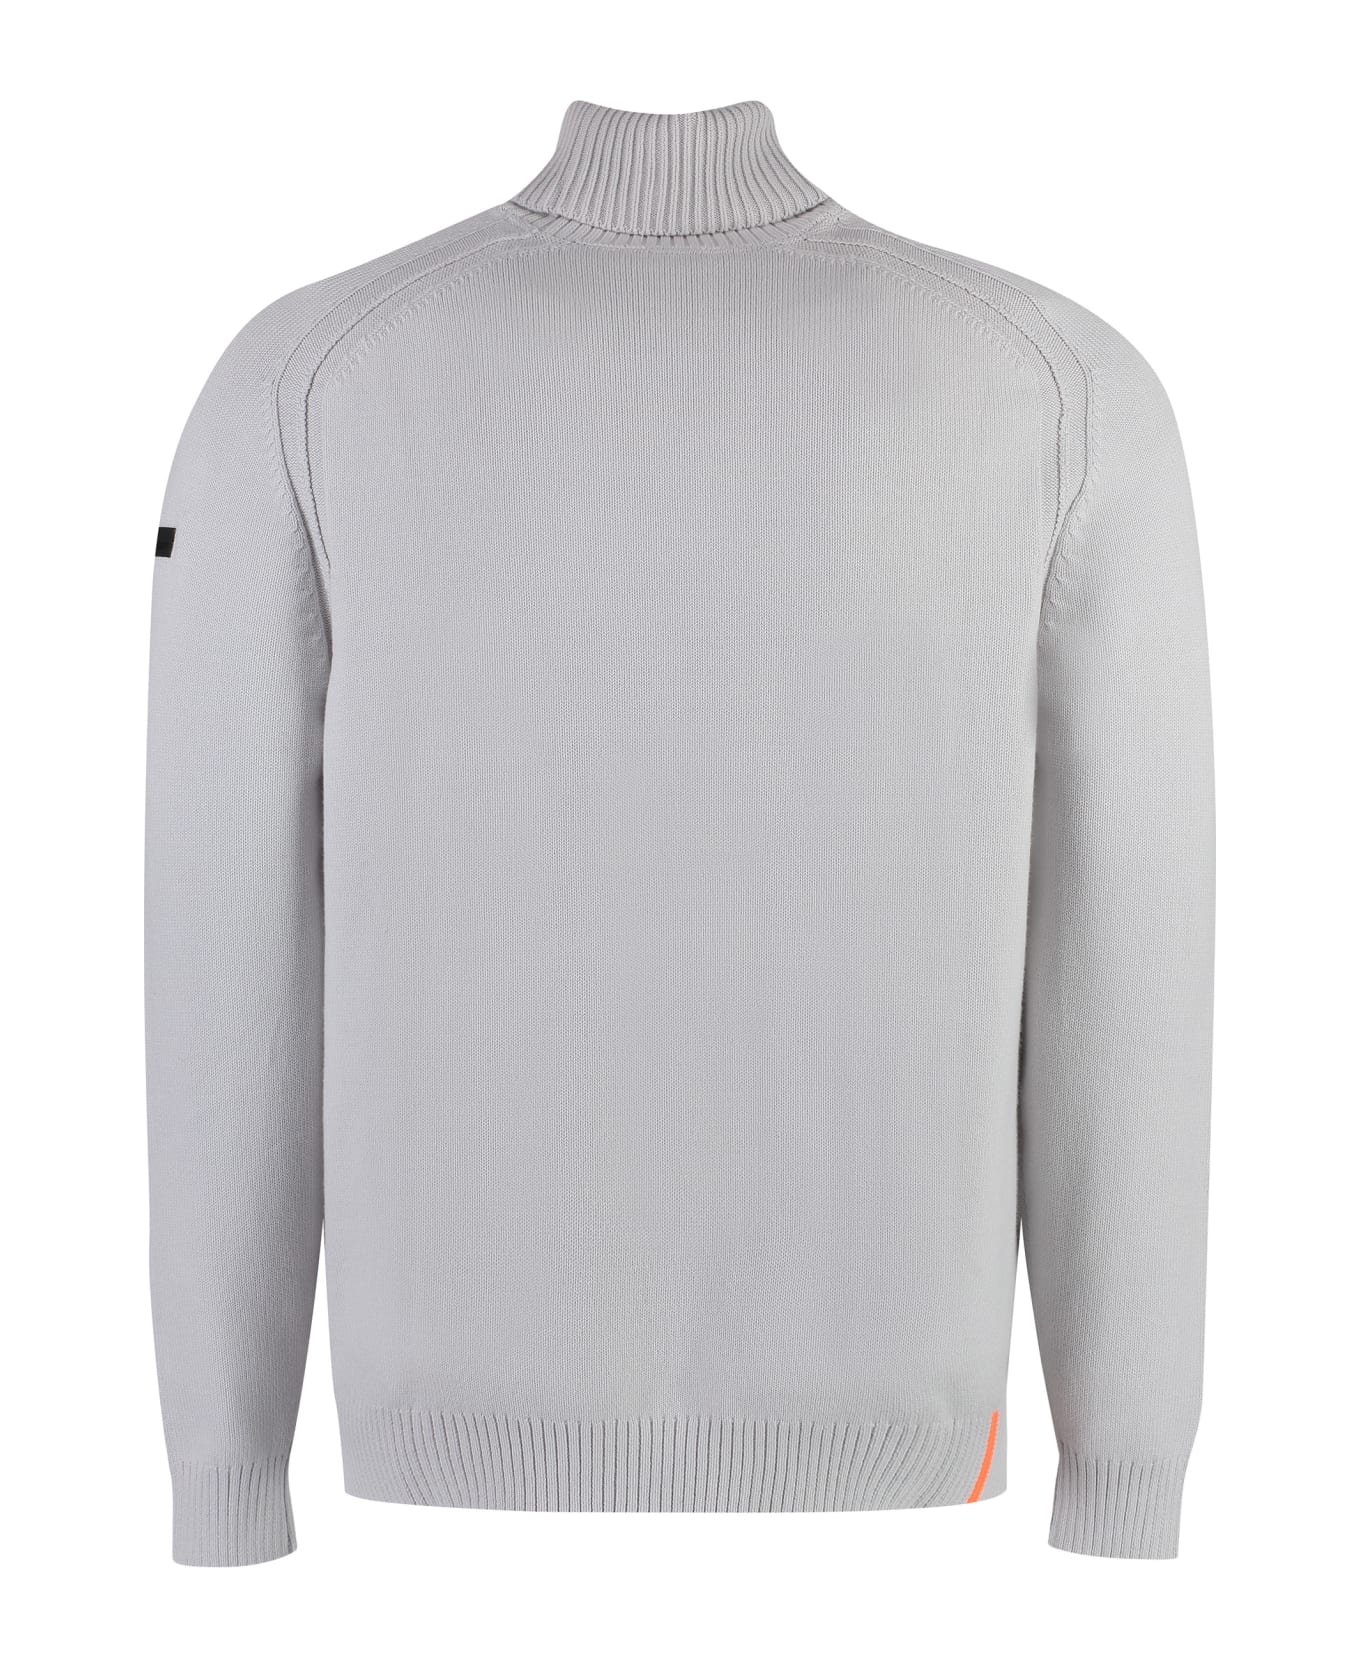 RRD - Roberto Ricci Design Cotton Turtleneck Sweater - grey